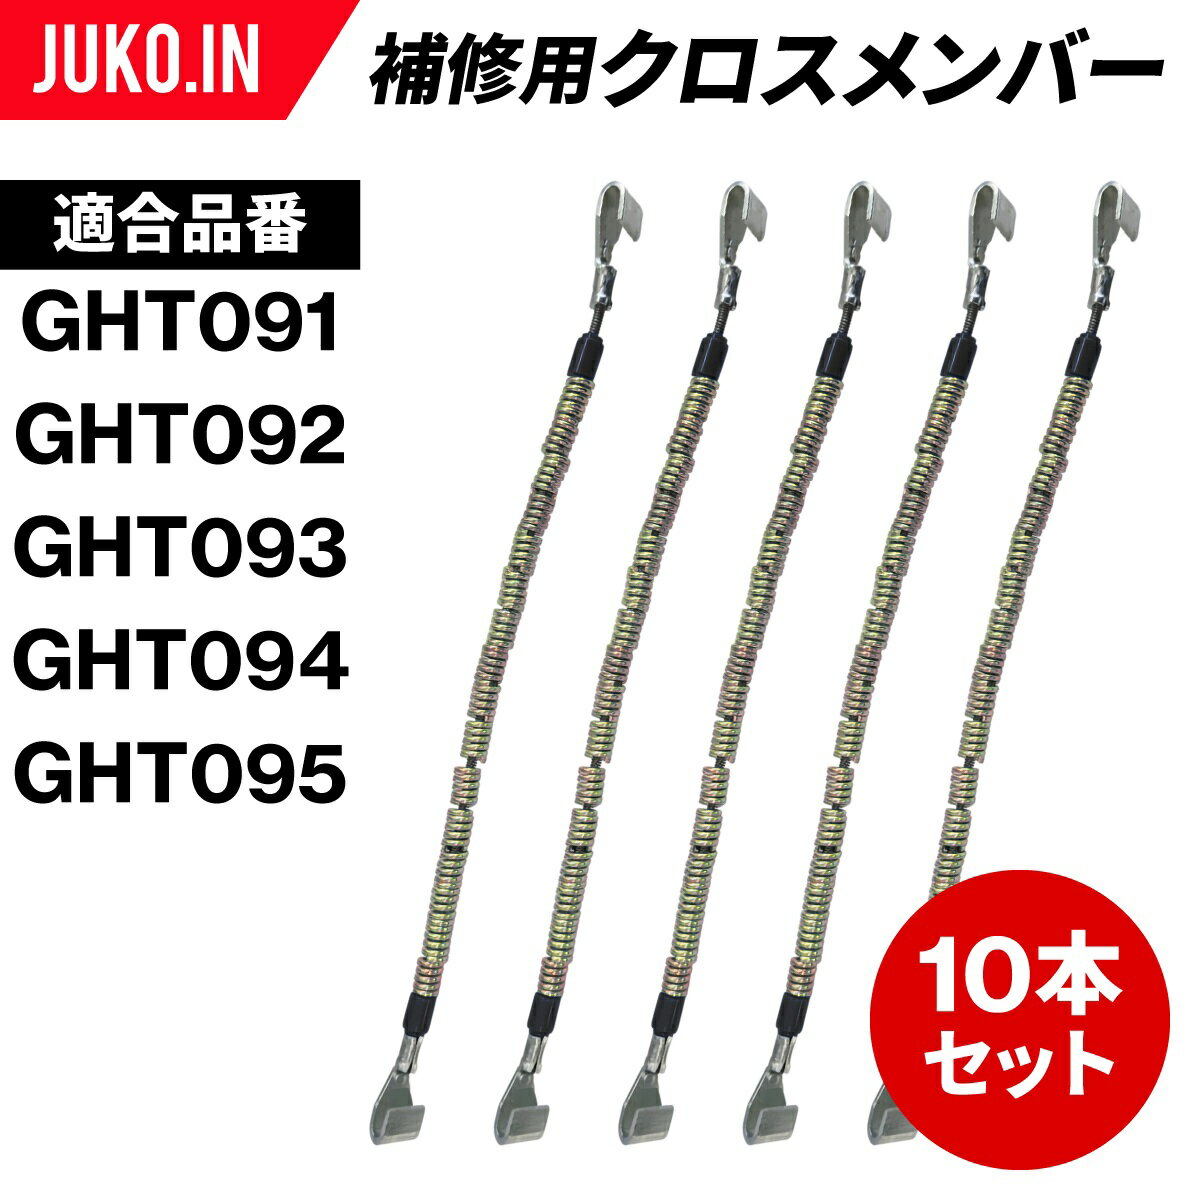 SCC JAPAN|GHT909|10本セット|補修用クロ